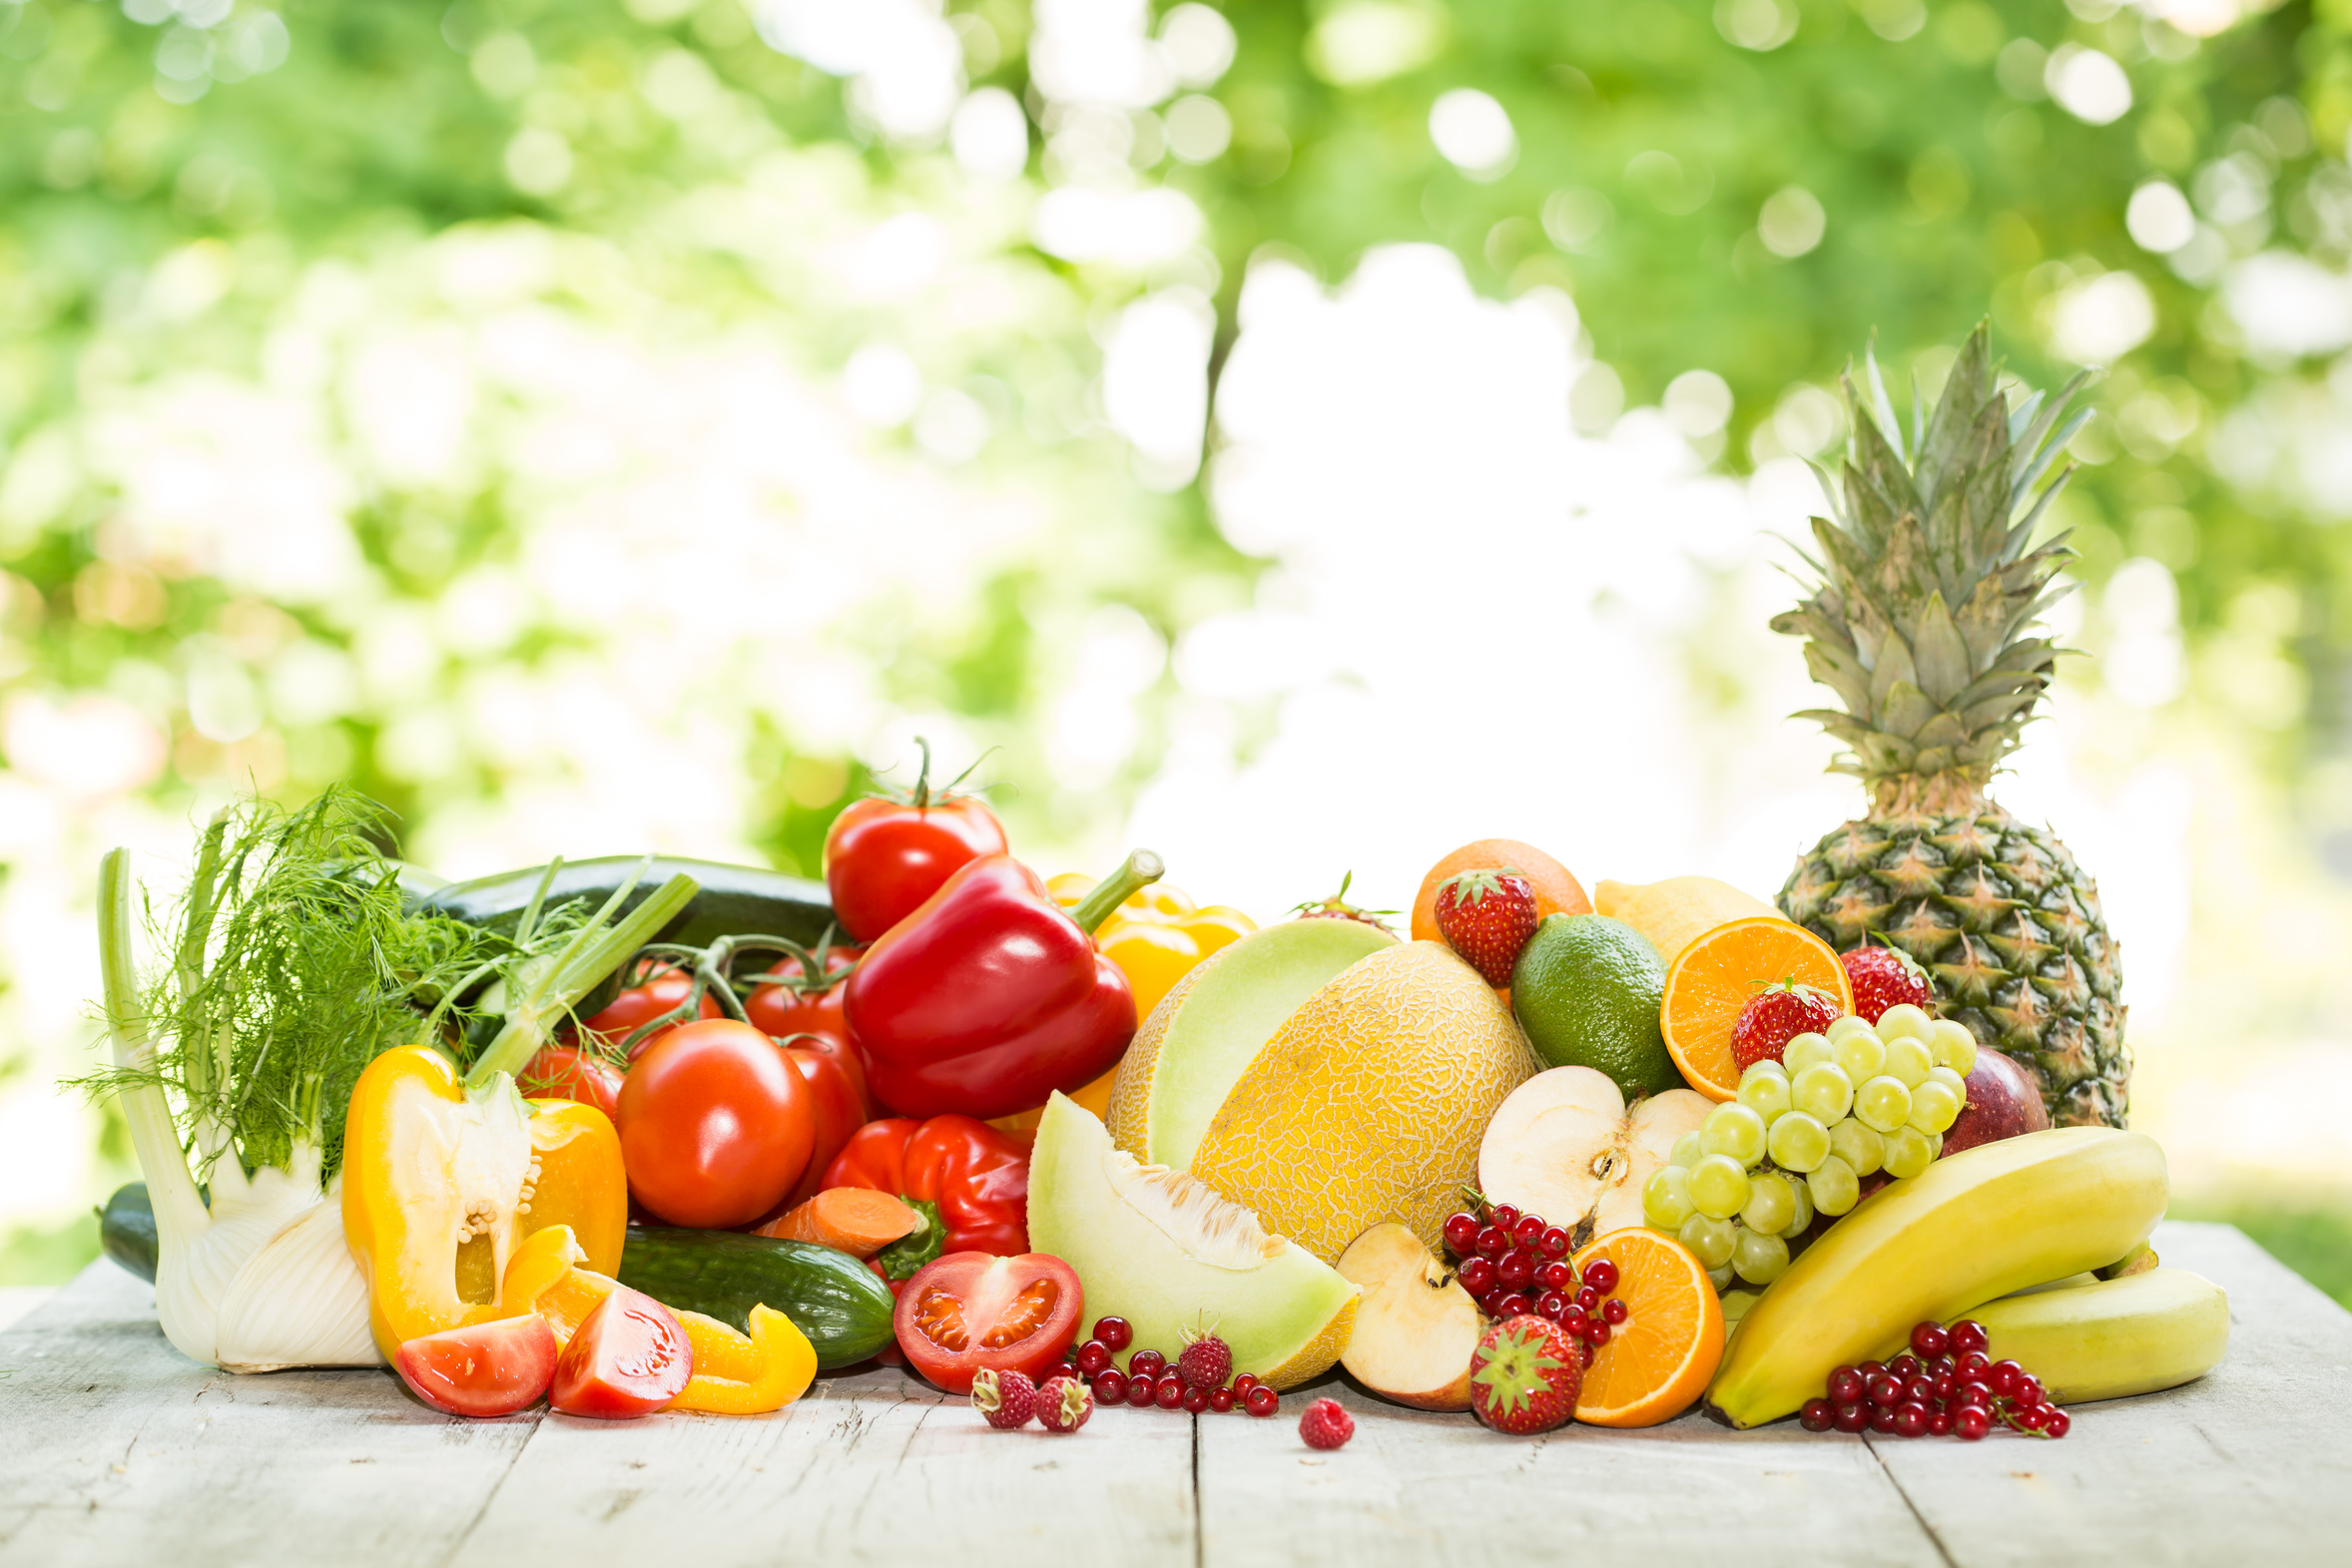 nella pancia: frutta e verdura freschi 